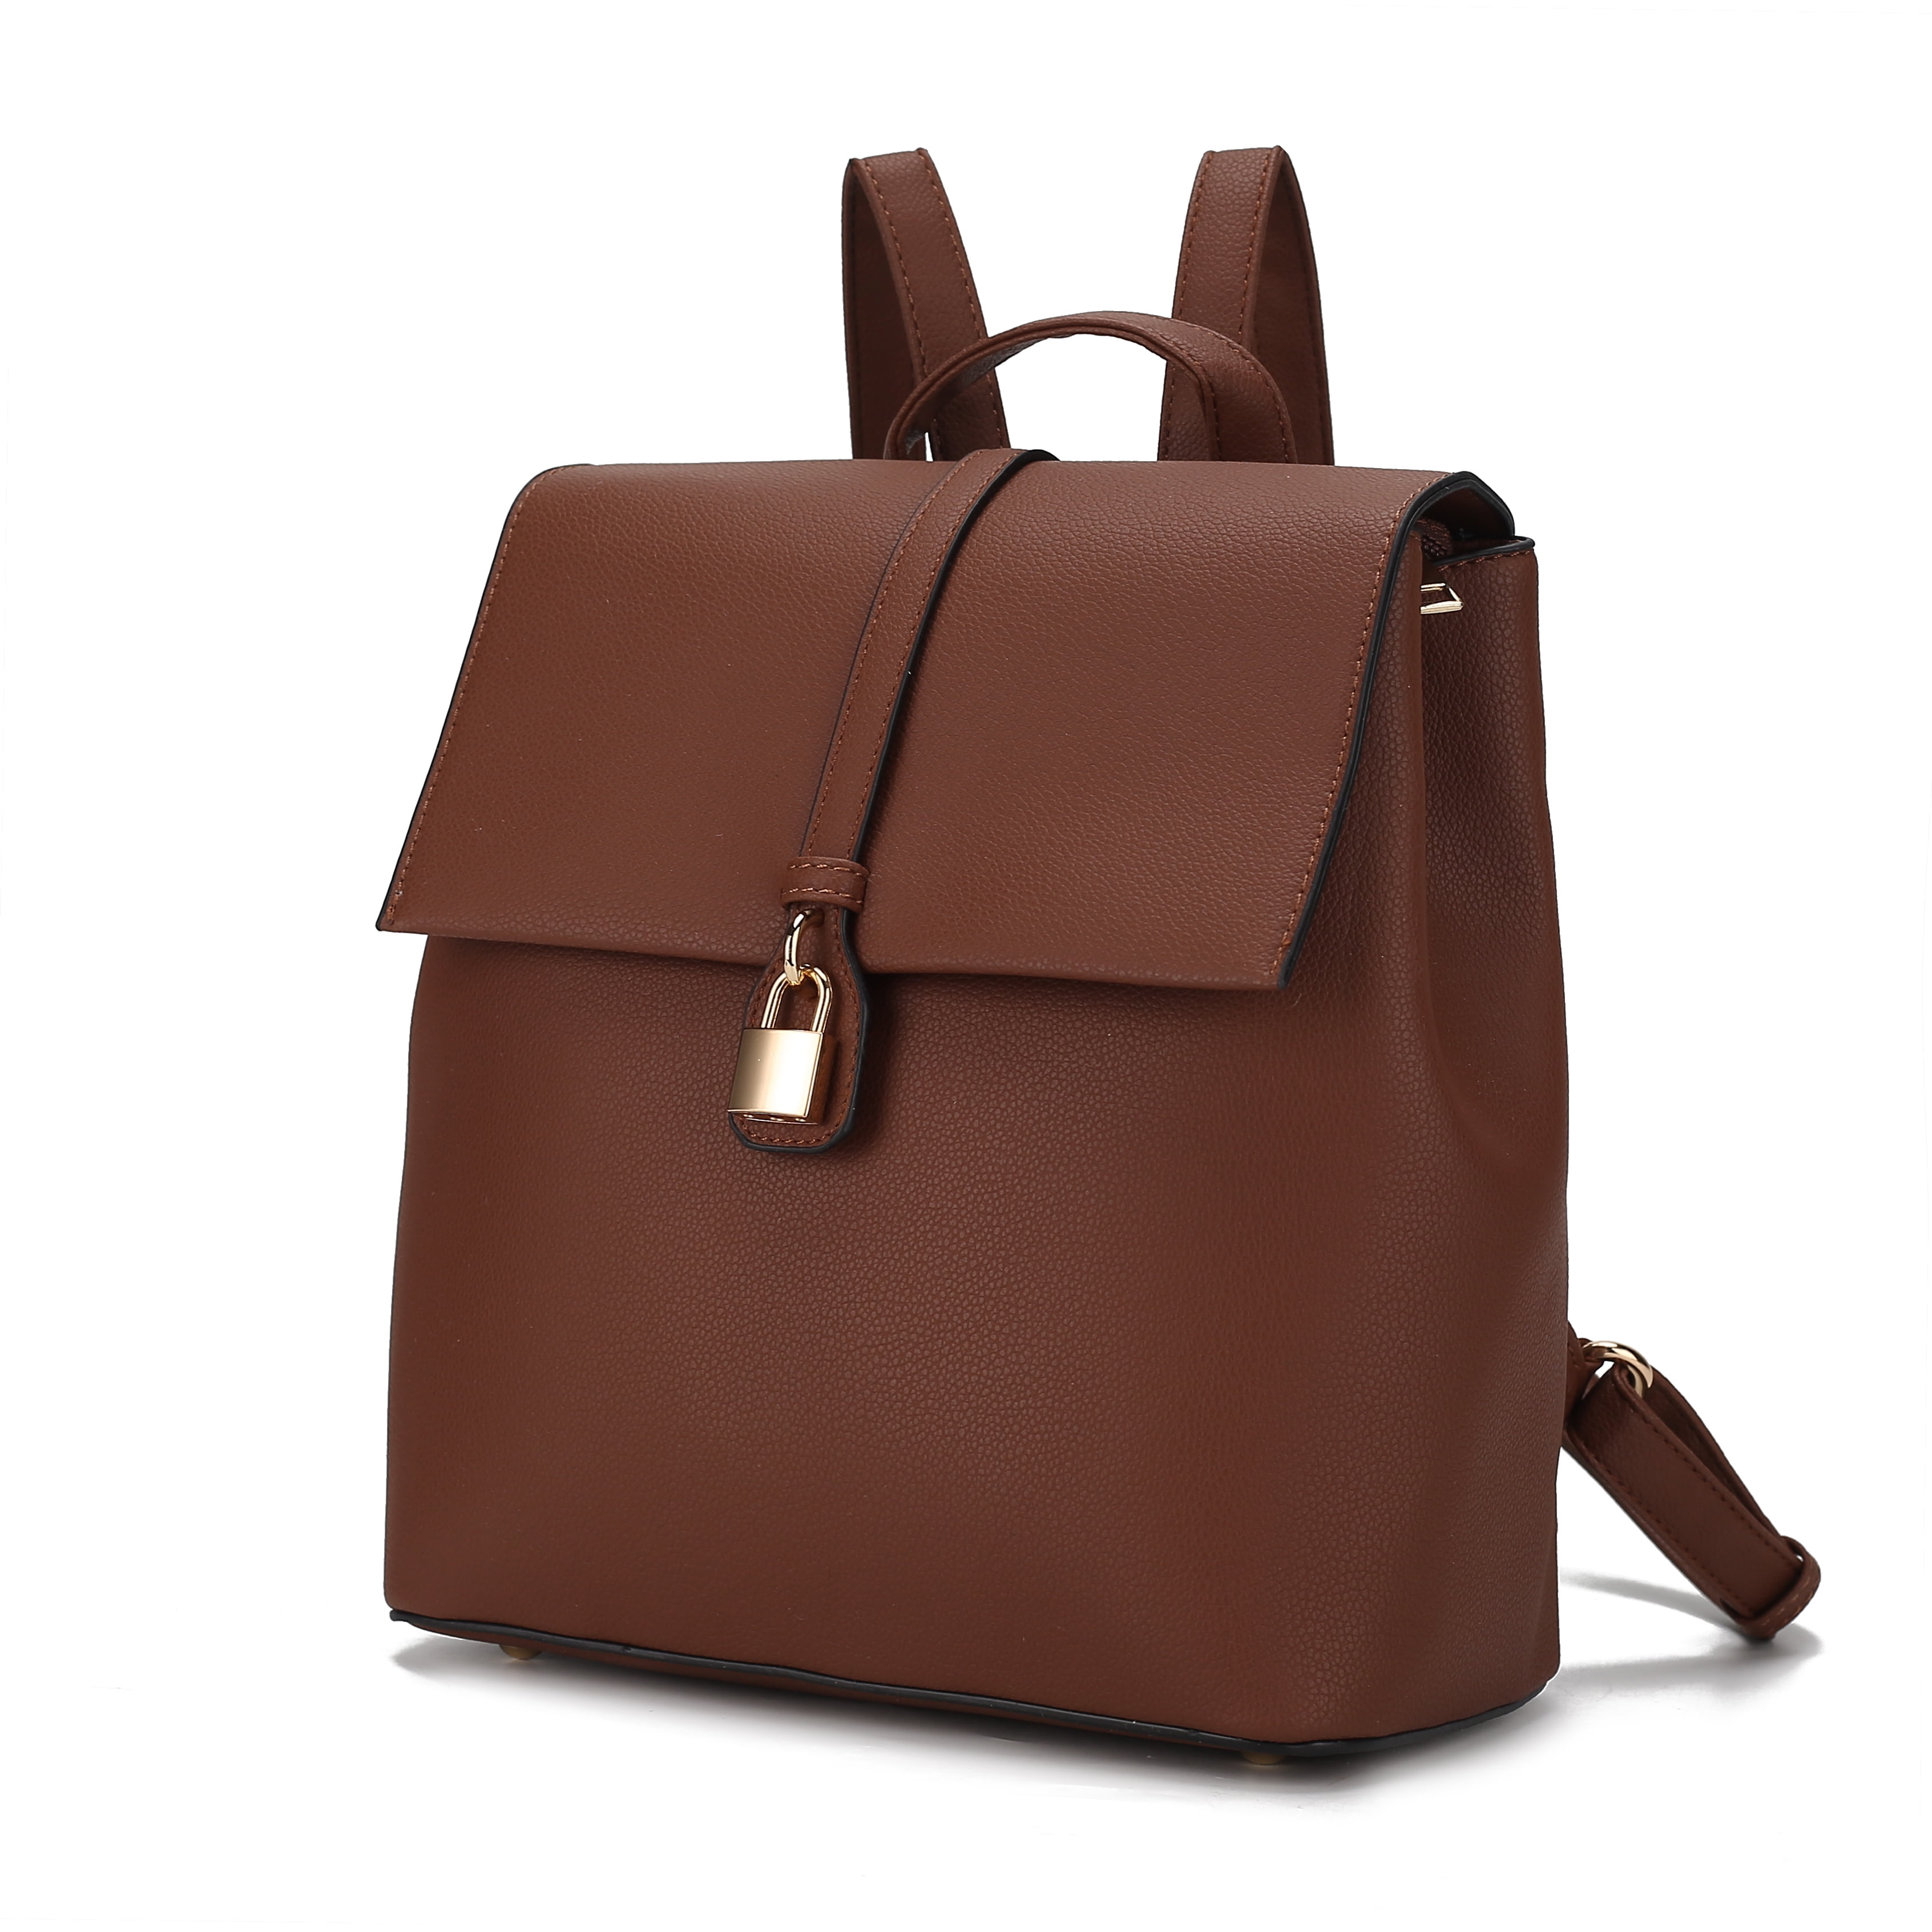  HKCLUF Backpack Purse for Women Vegan Leather Travel Backpack  Multipurpose Design Convertible Satchel Bag Handbag and Purse 2Pcs Pack